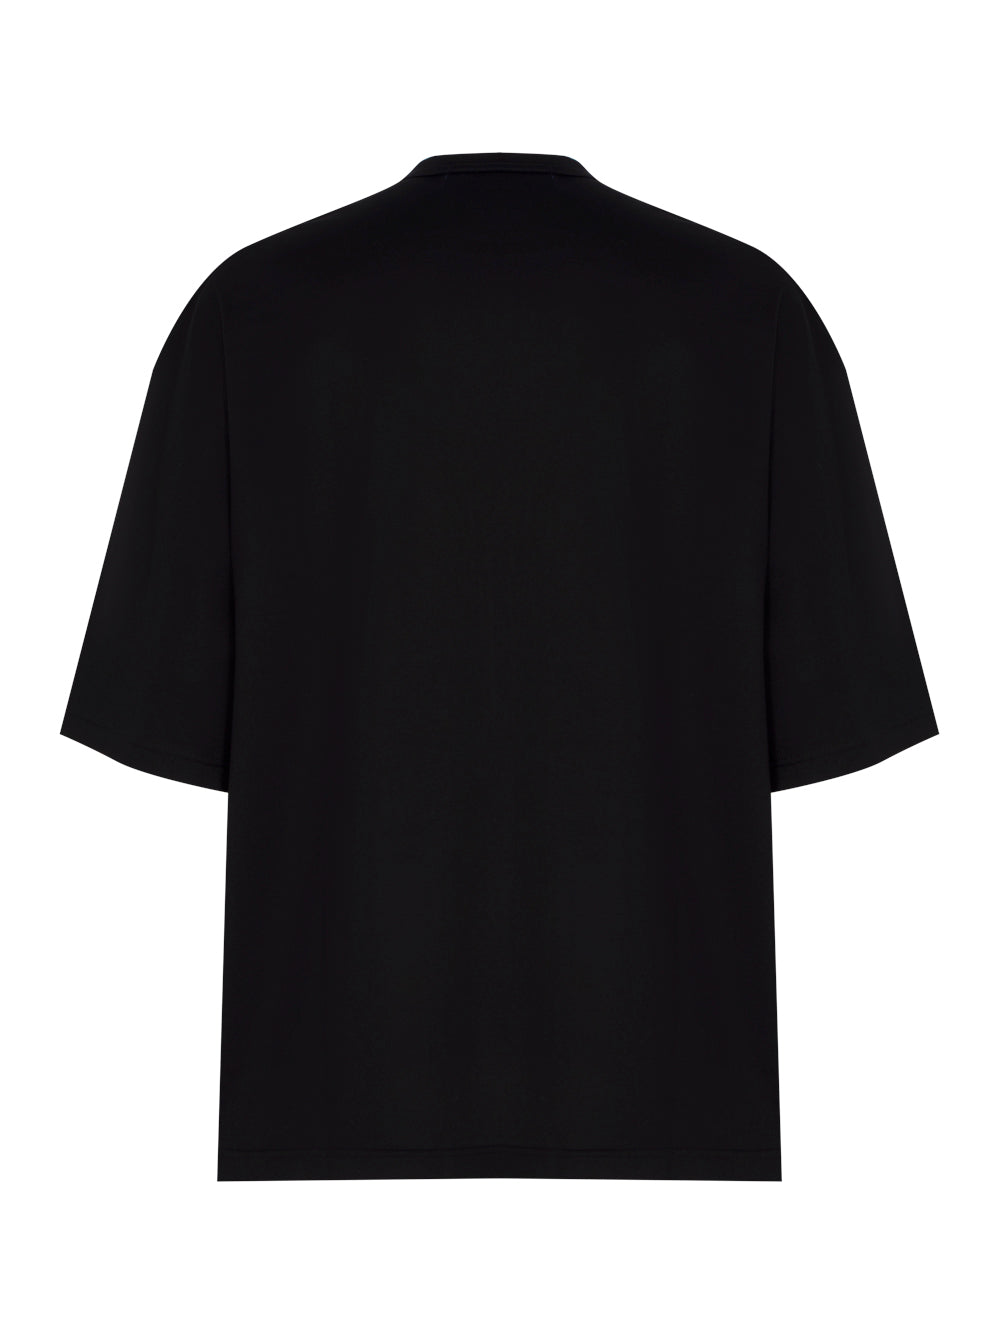 Cotton Jersey X Polyester Oxford Black